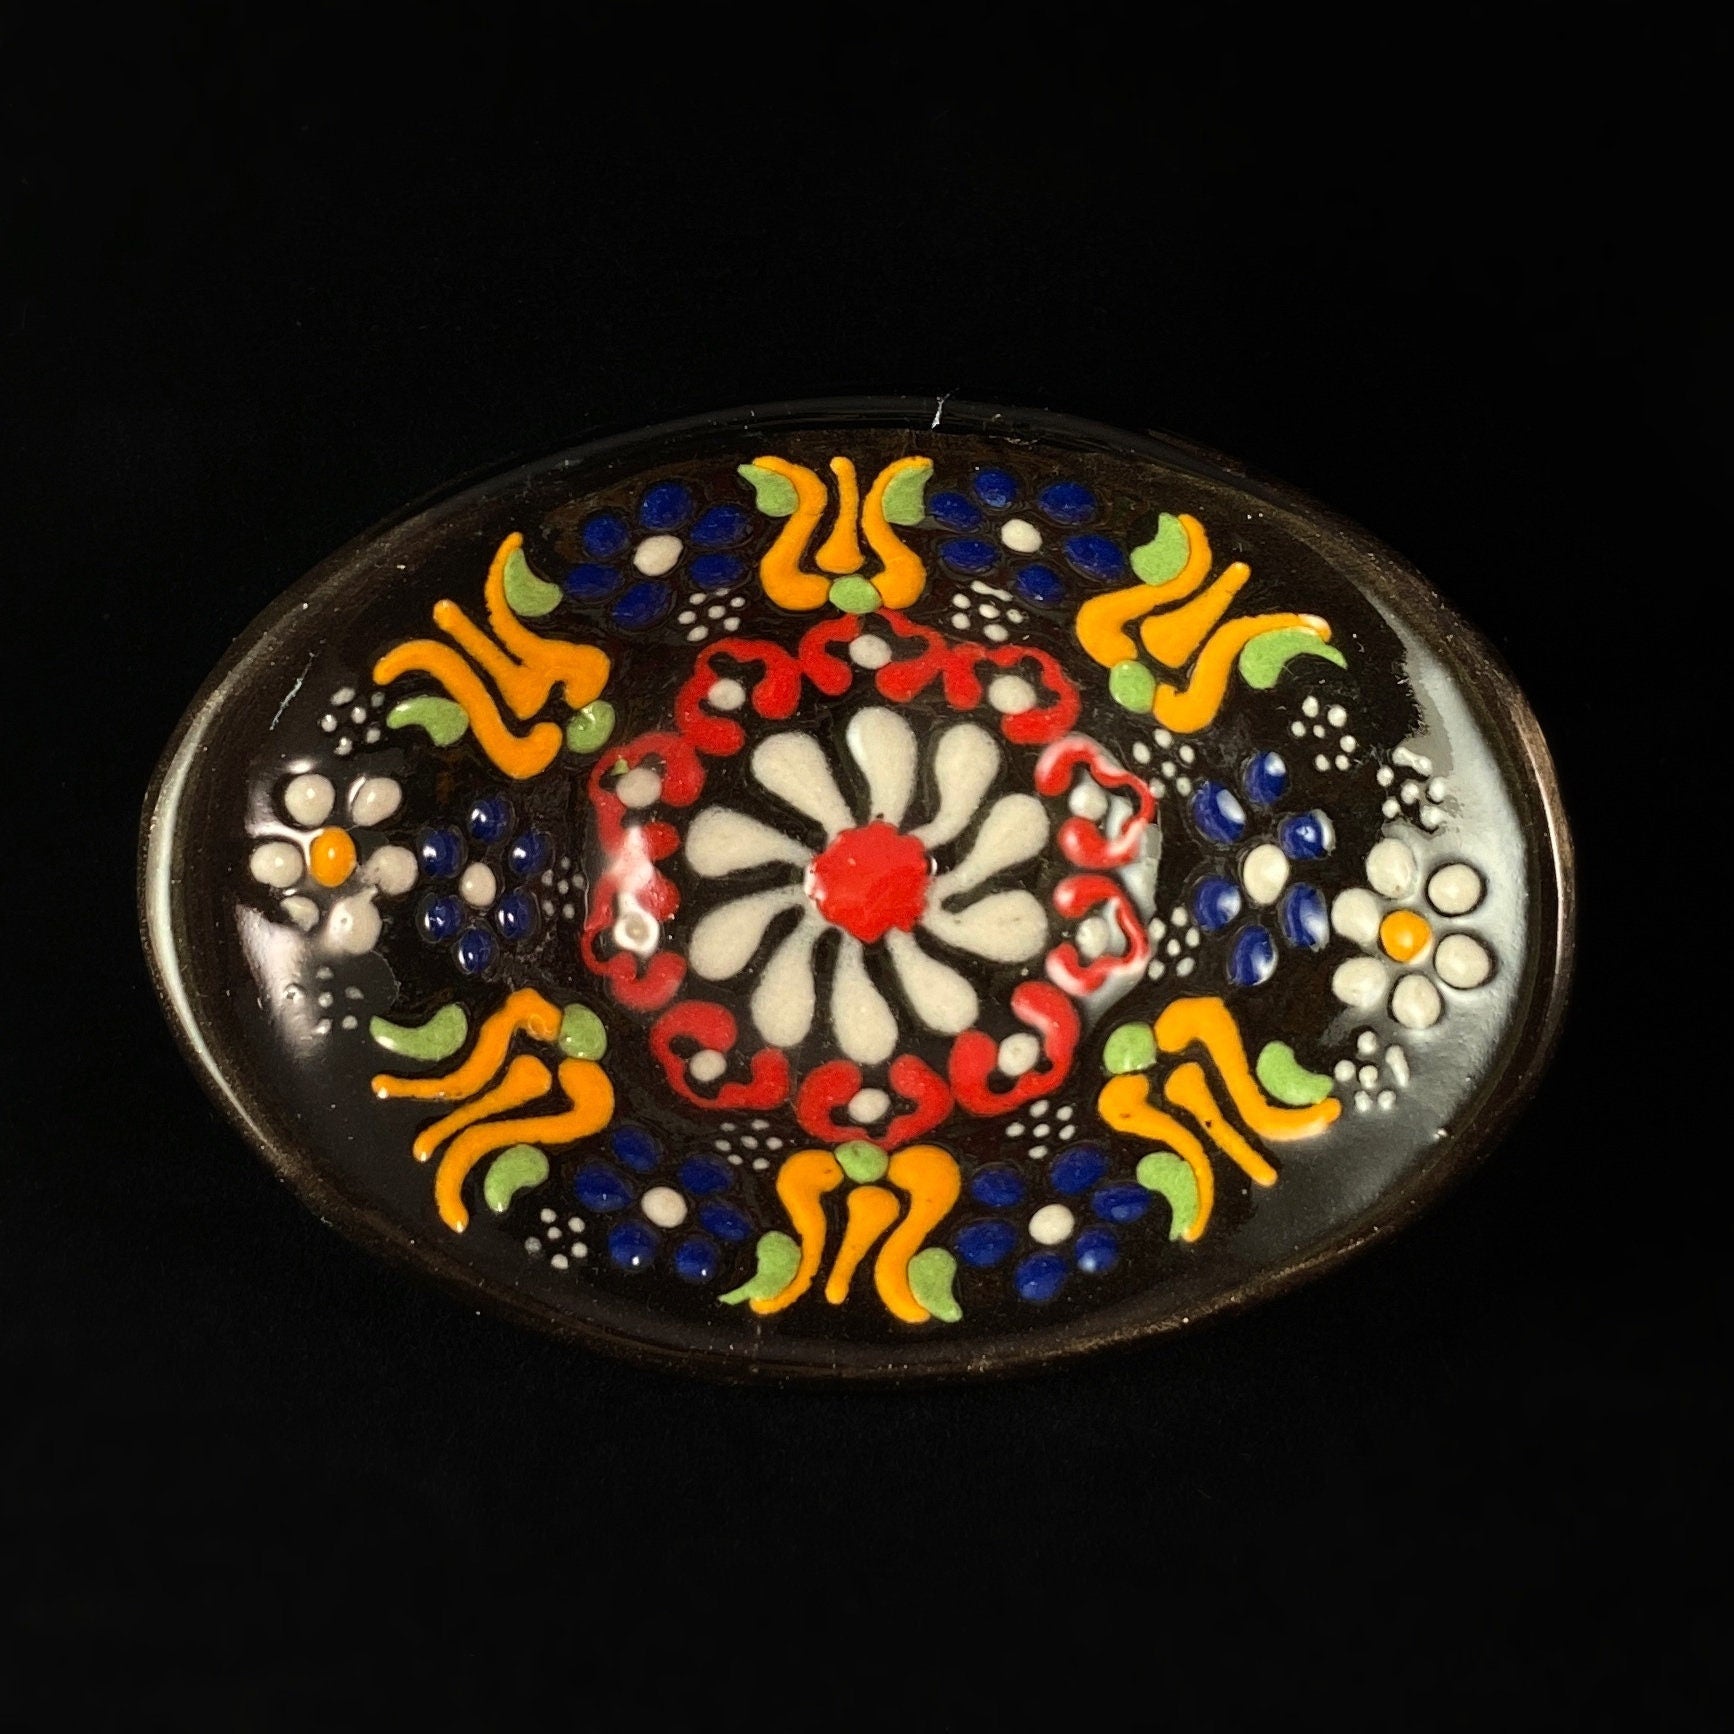 Handmade Oblong Sugar Bowl, Functional and Decorative Turkish Pottery, Cottagecore Style, Black